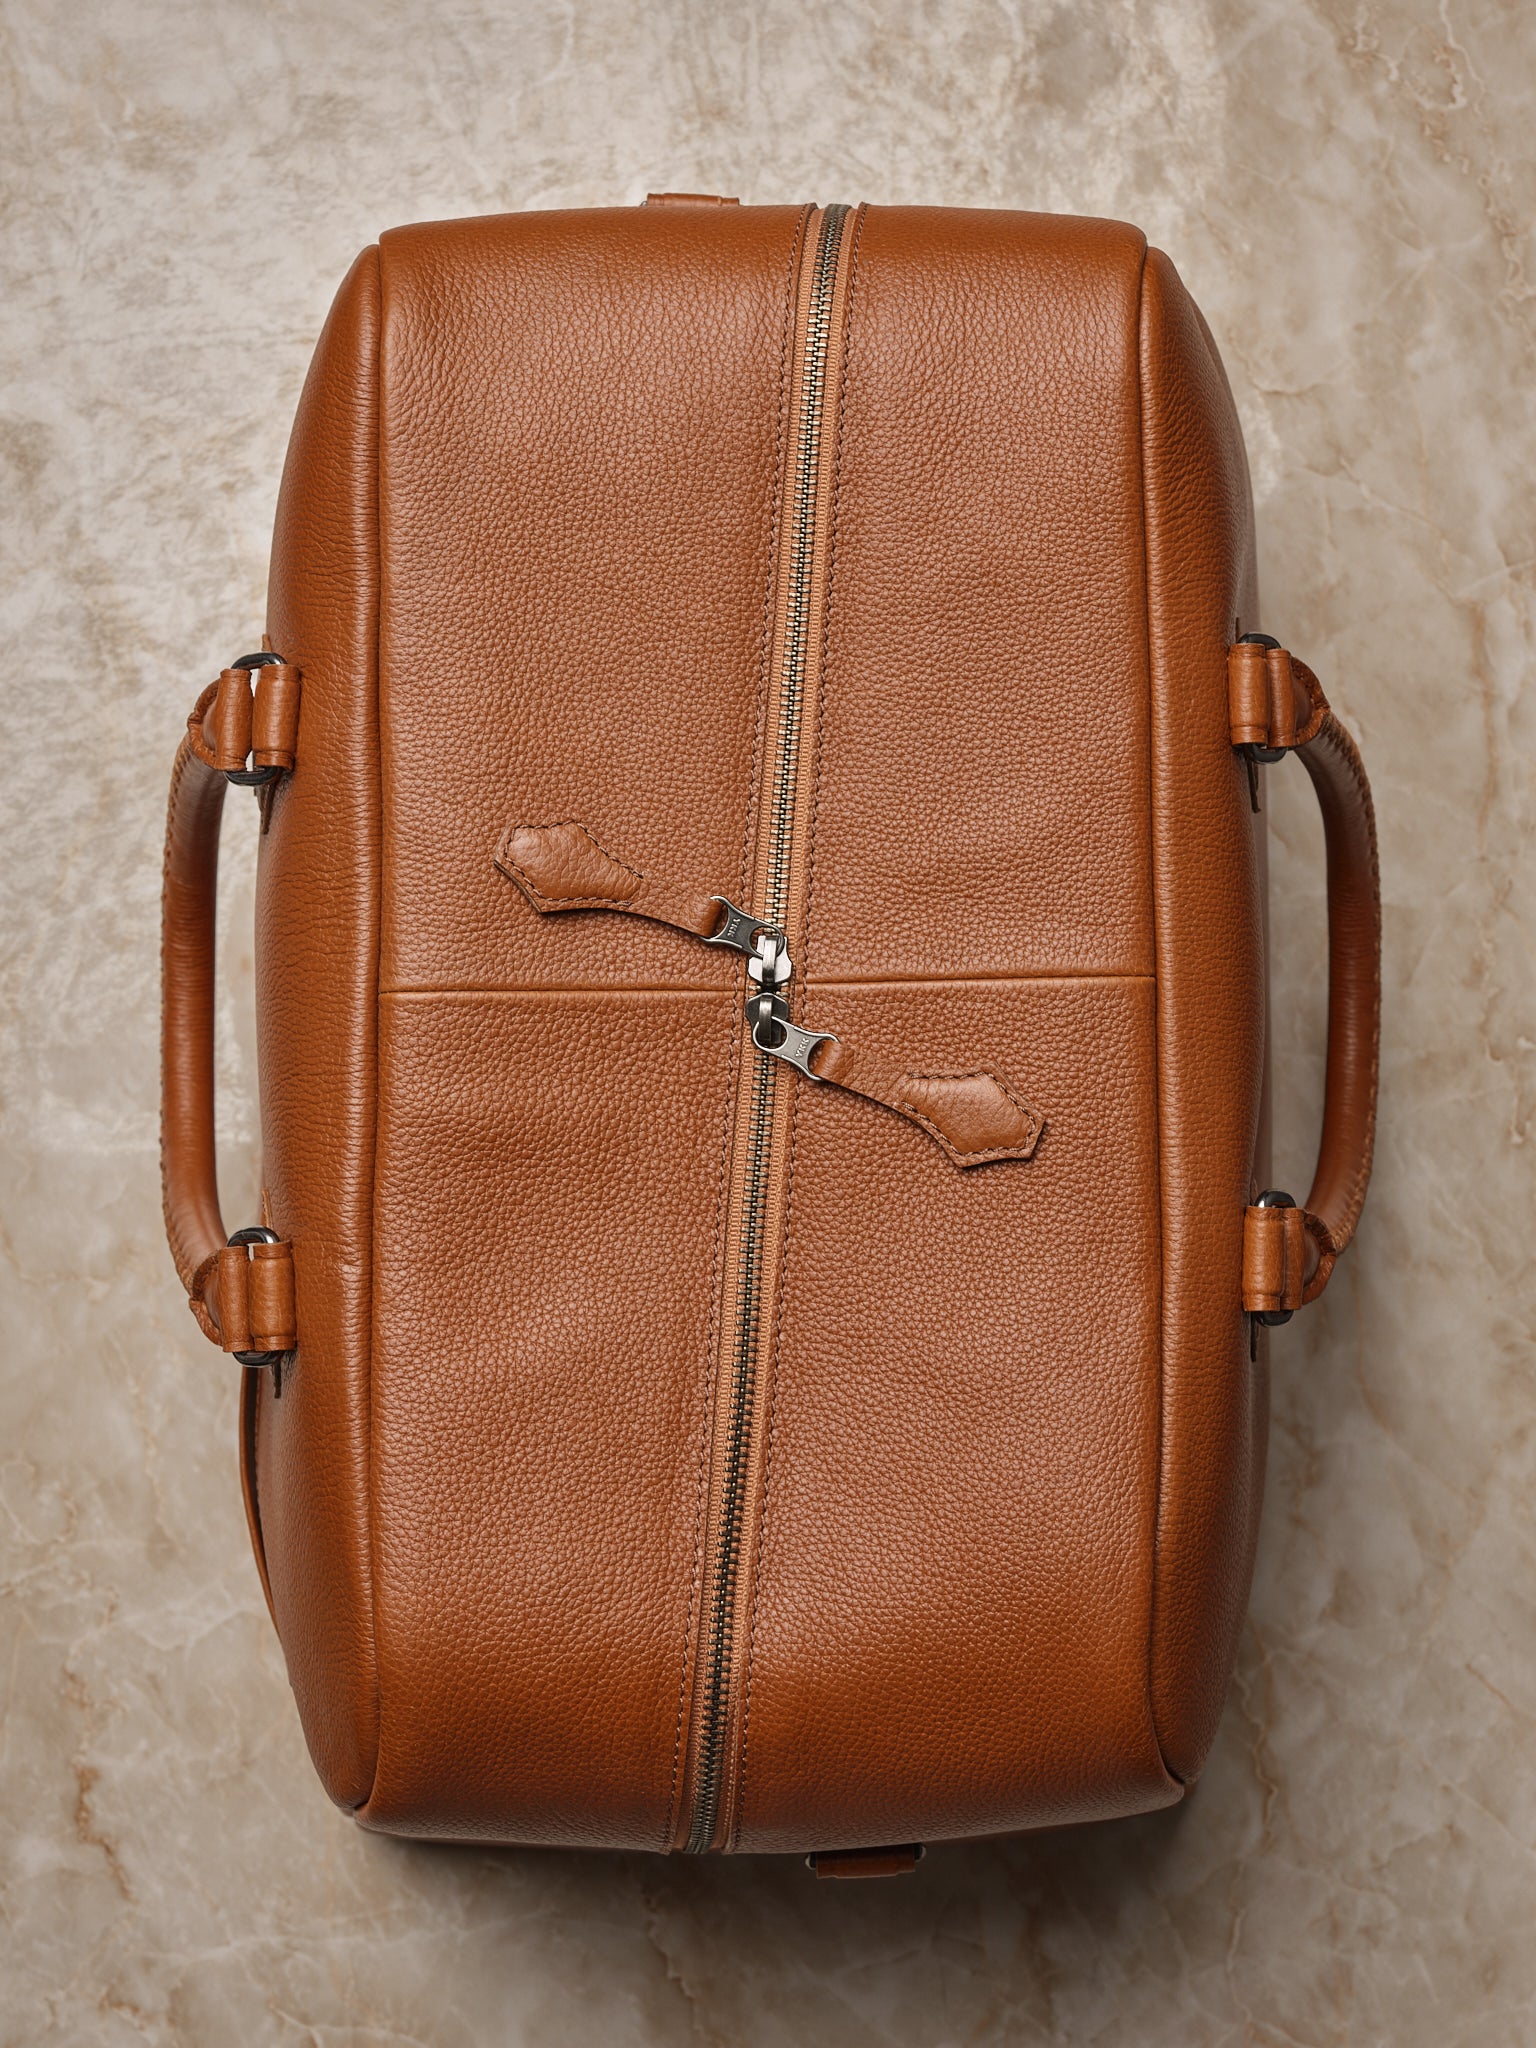 Cross-diagonal Zipper. Wide Main Compartment. Weekend Travel Bag Tan by Capra Leather